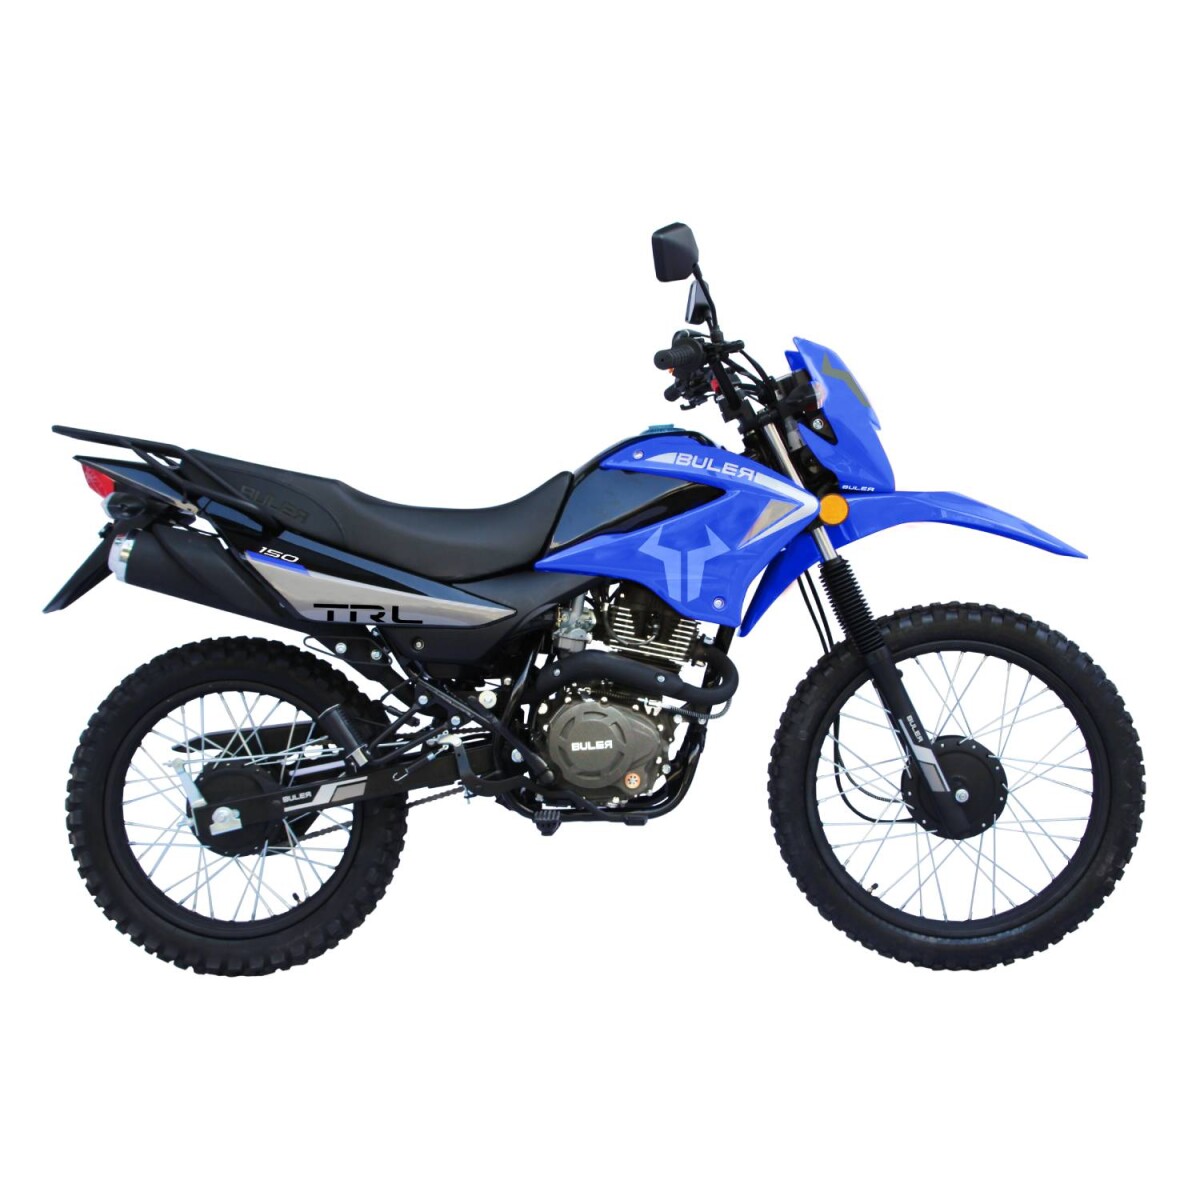 Motocicleta Buler Trail TRL 150cc c/Rayos - Azul 